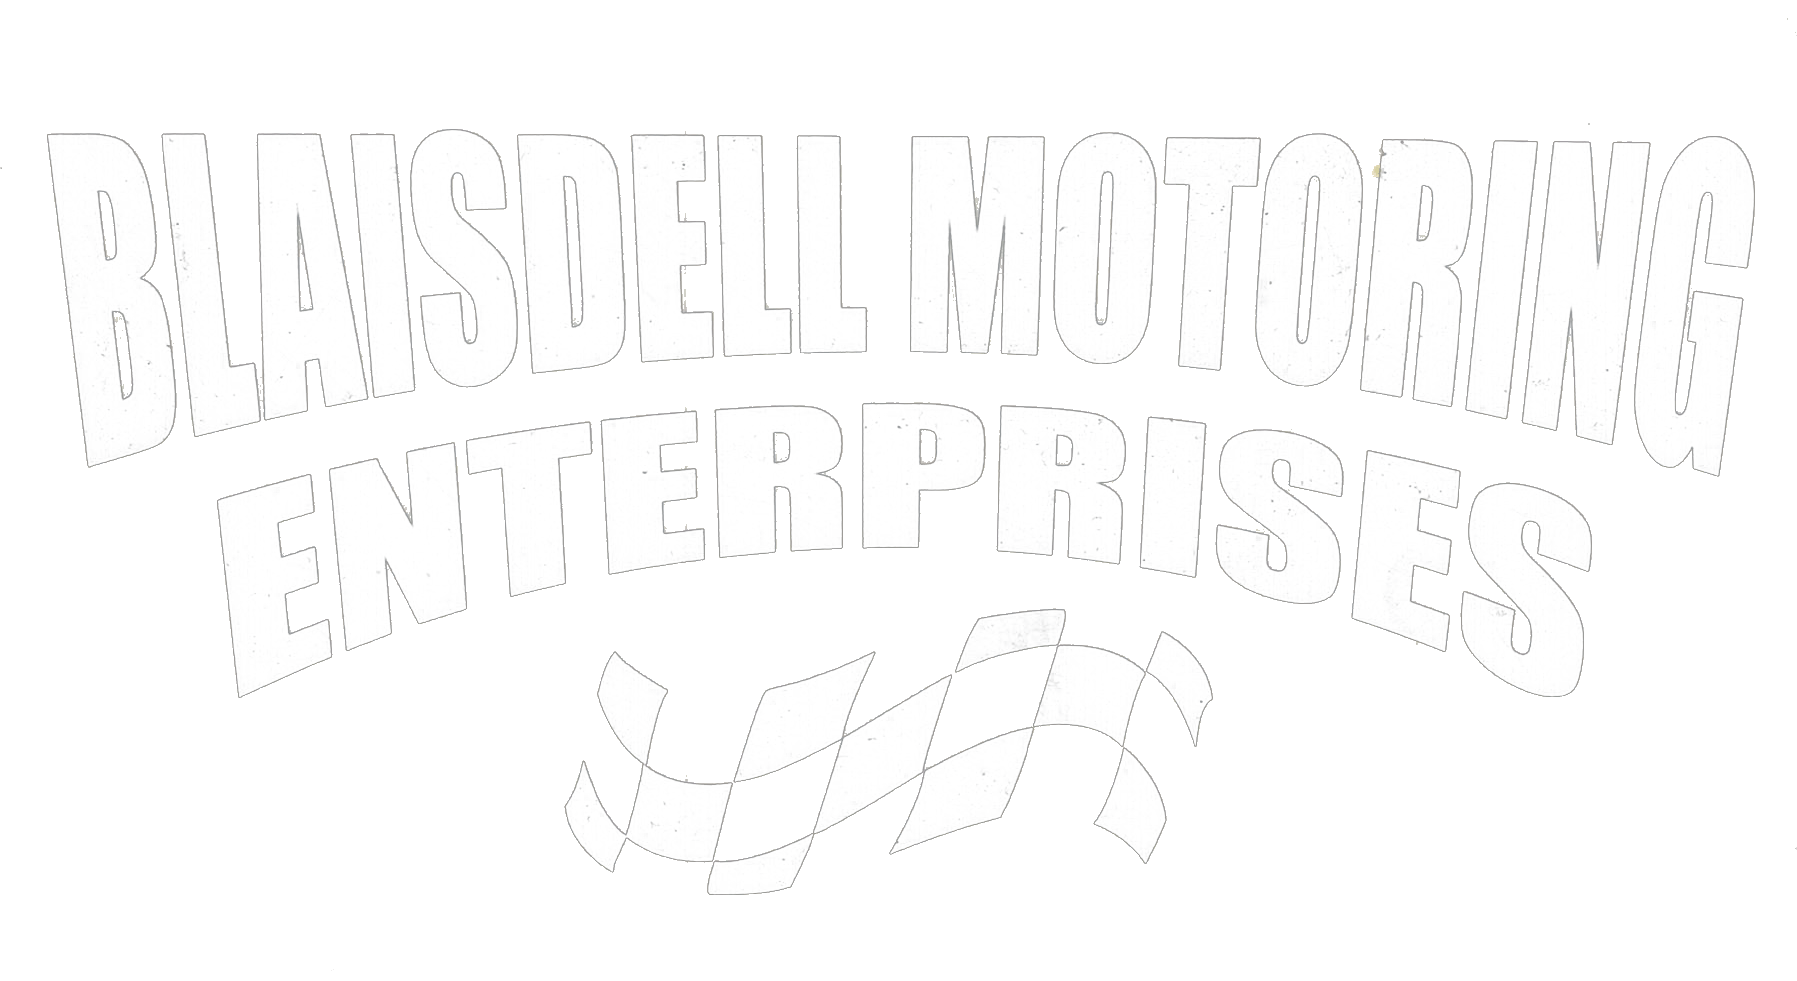 Blaisdell Motoring Enterprises Logo